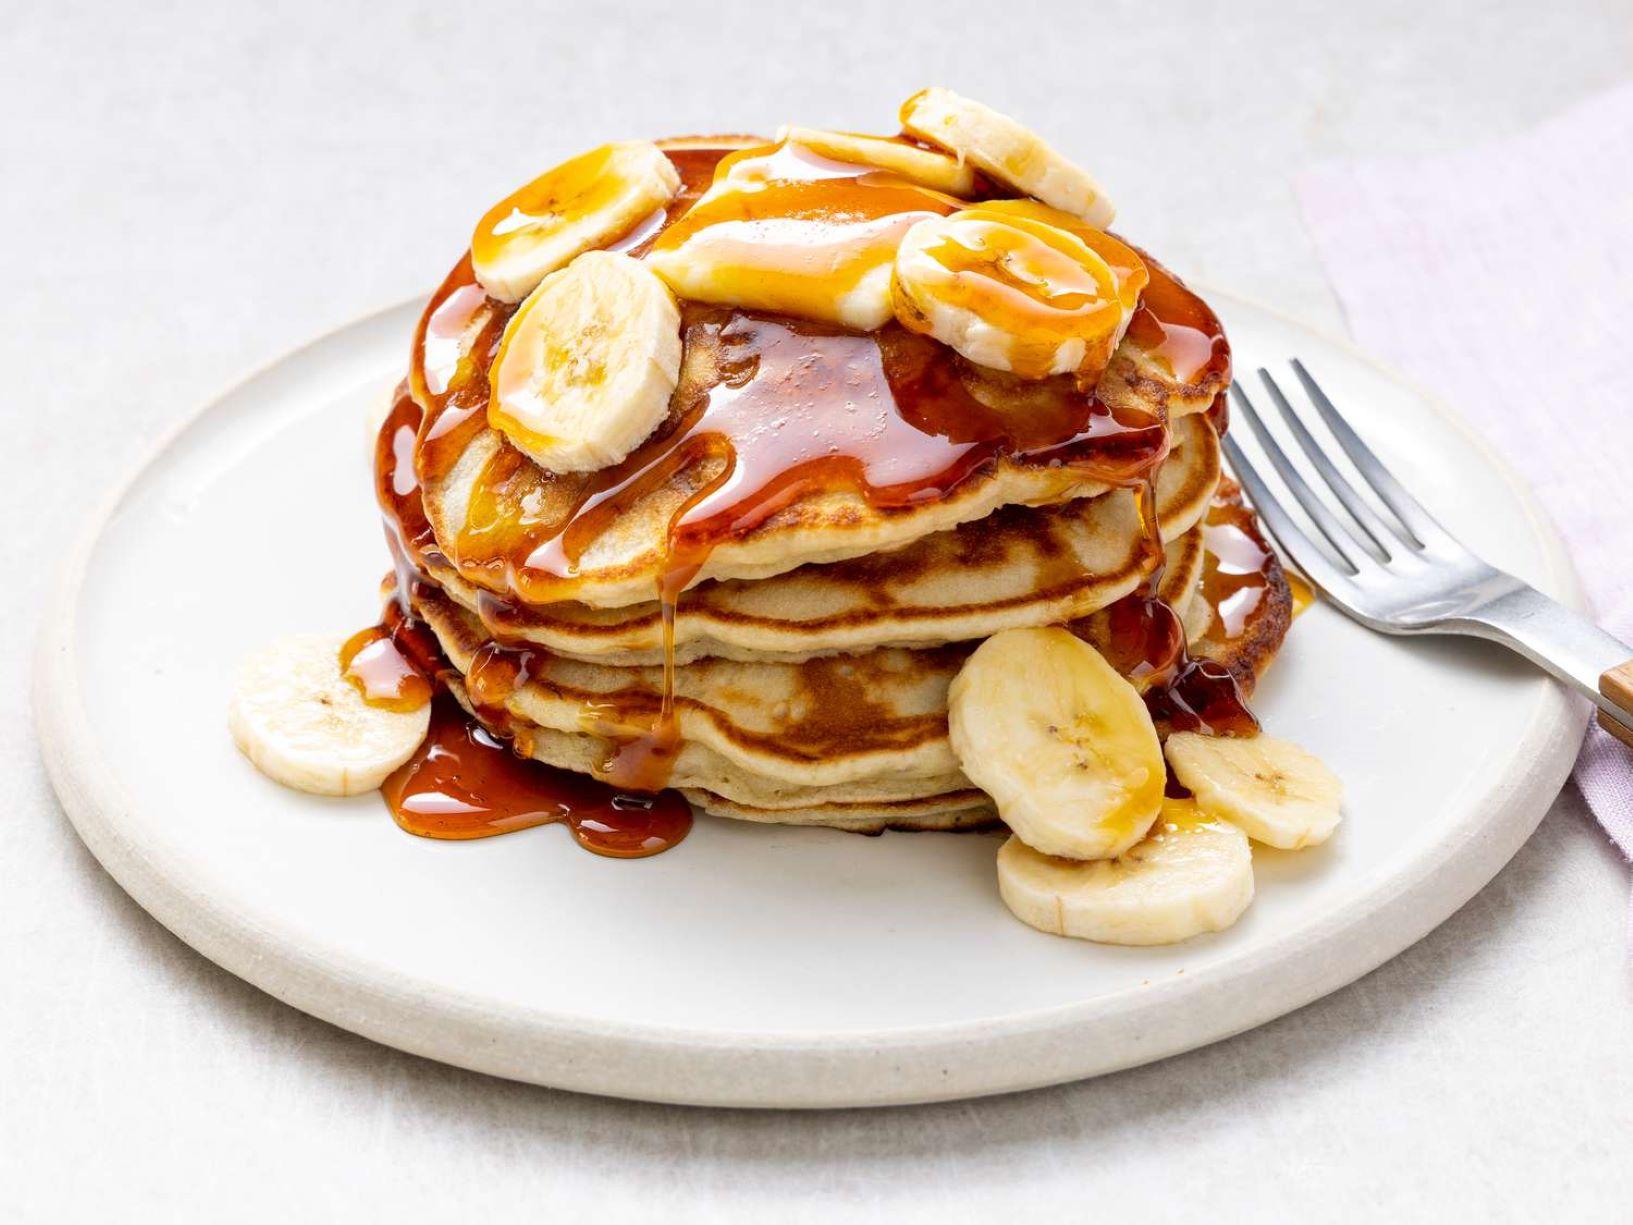 10-banana-pancakes-nutrition-facts